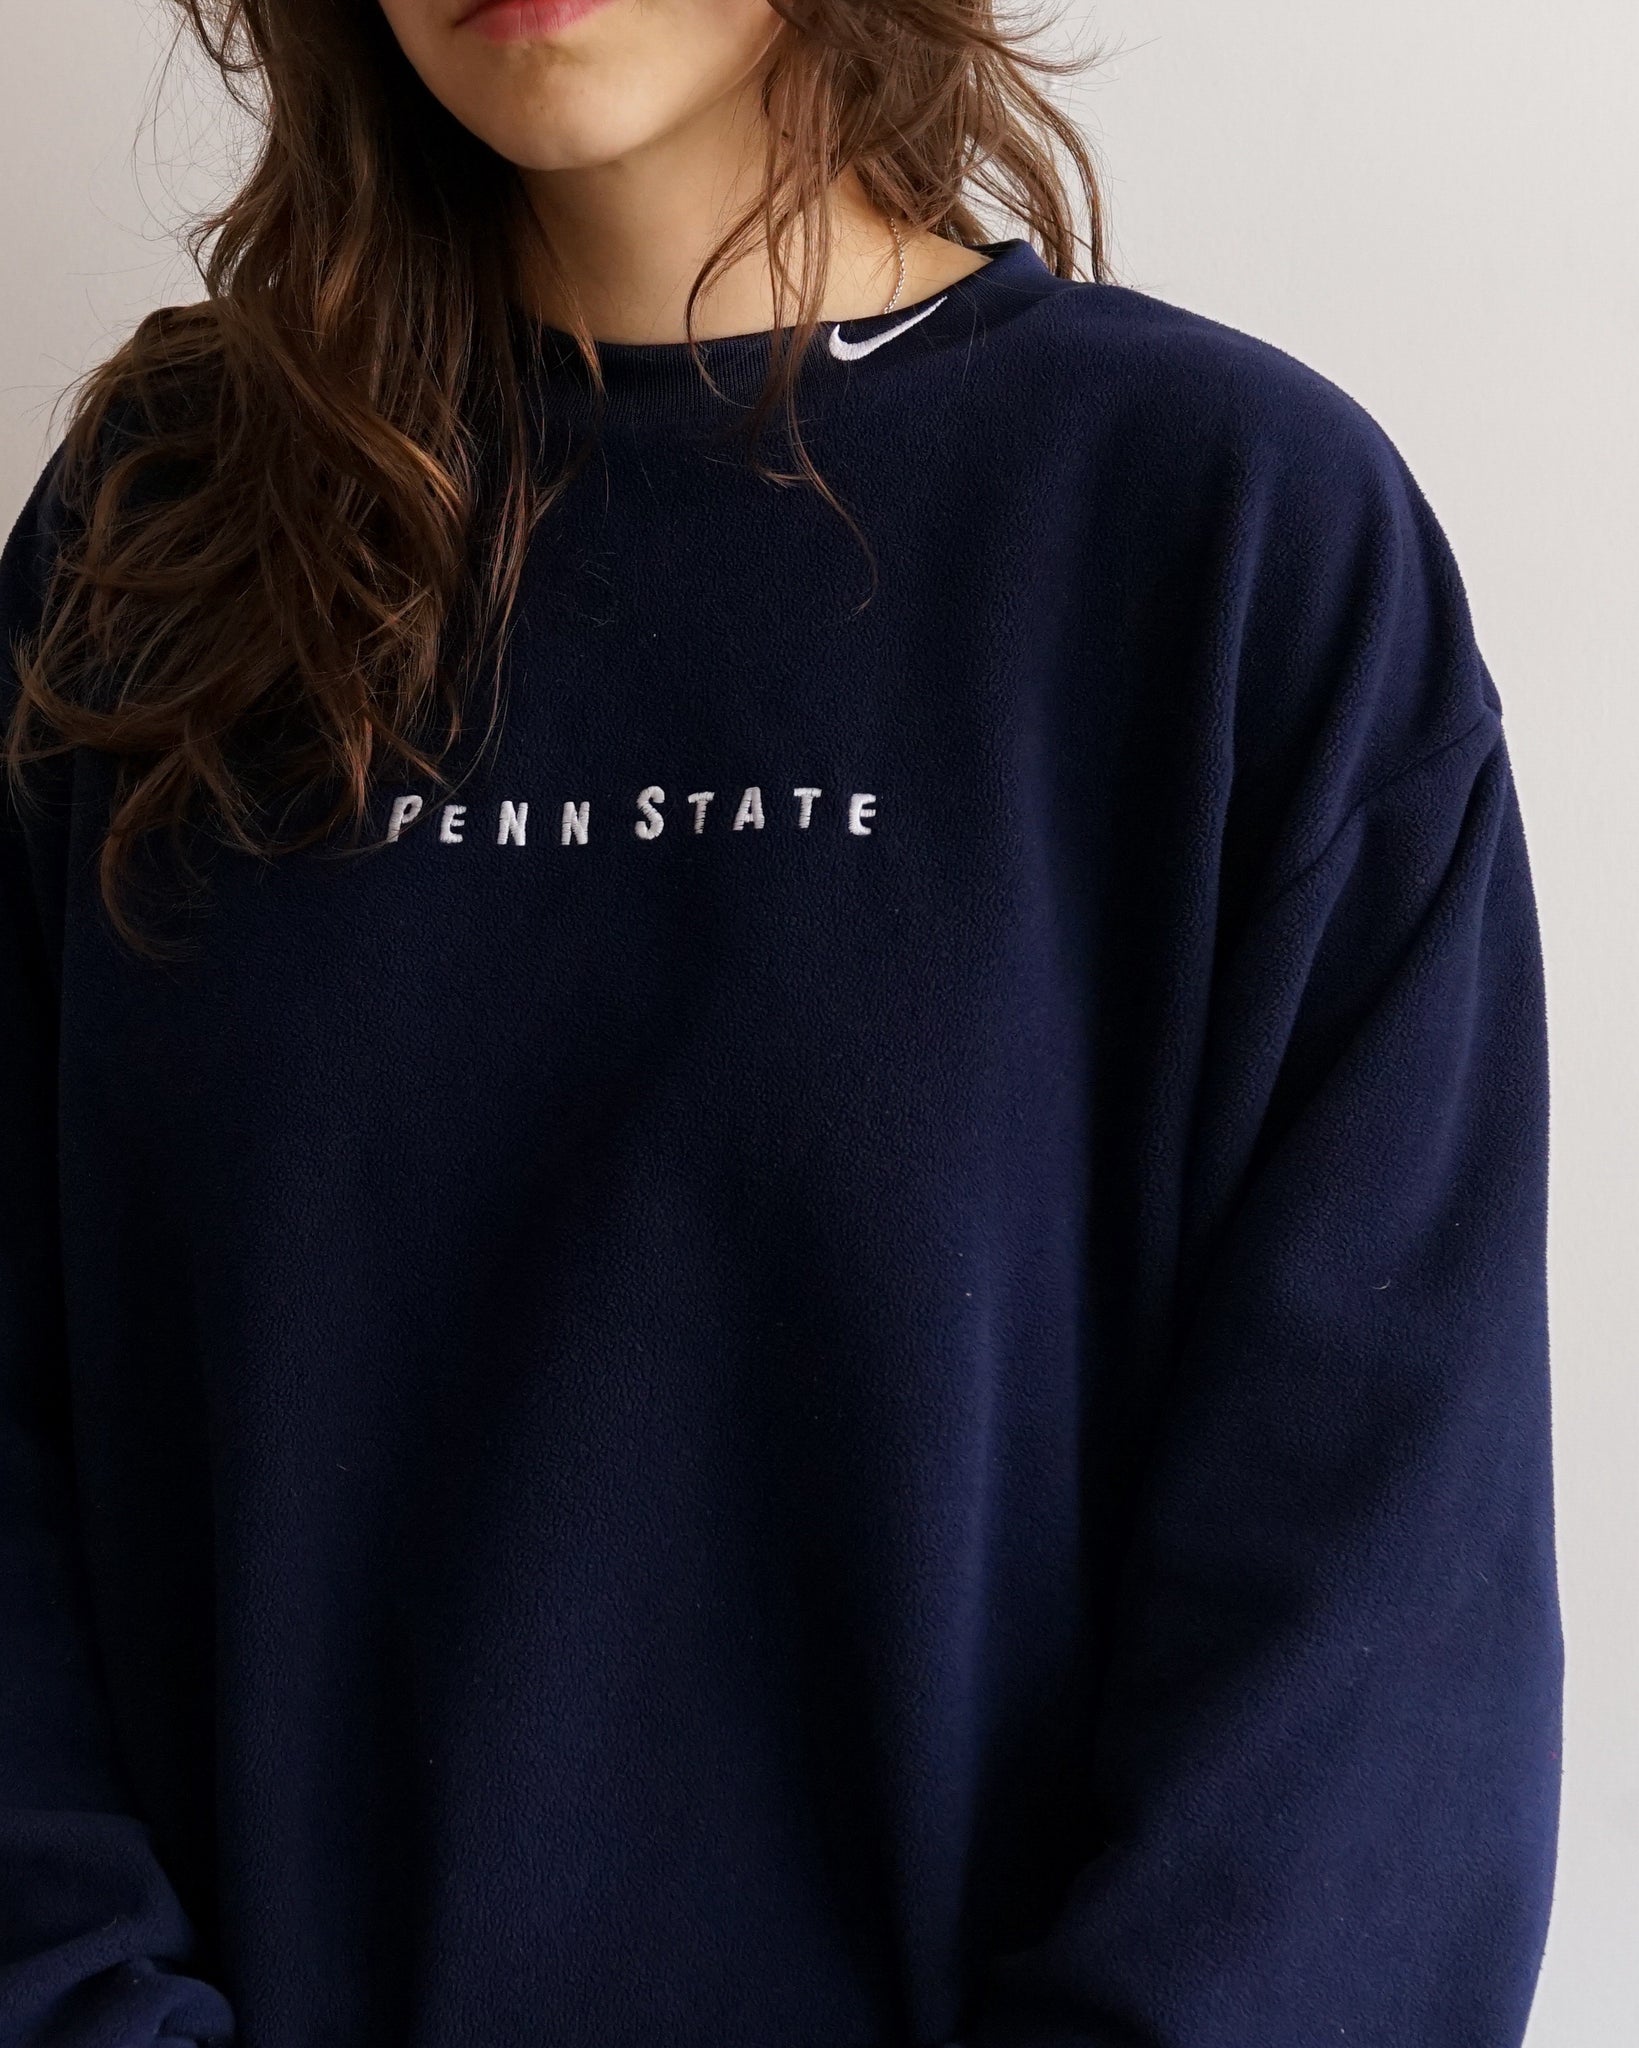 nike penn state fleece sweater